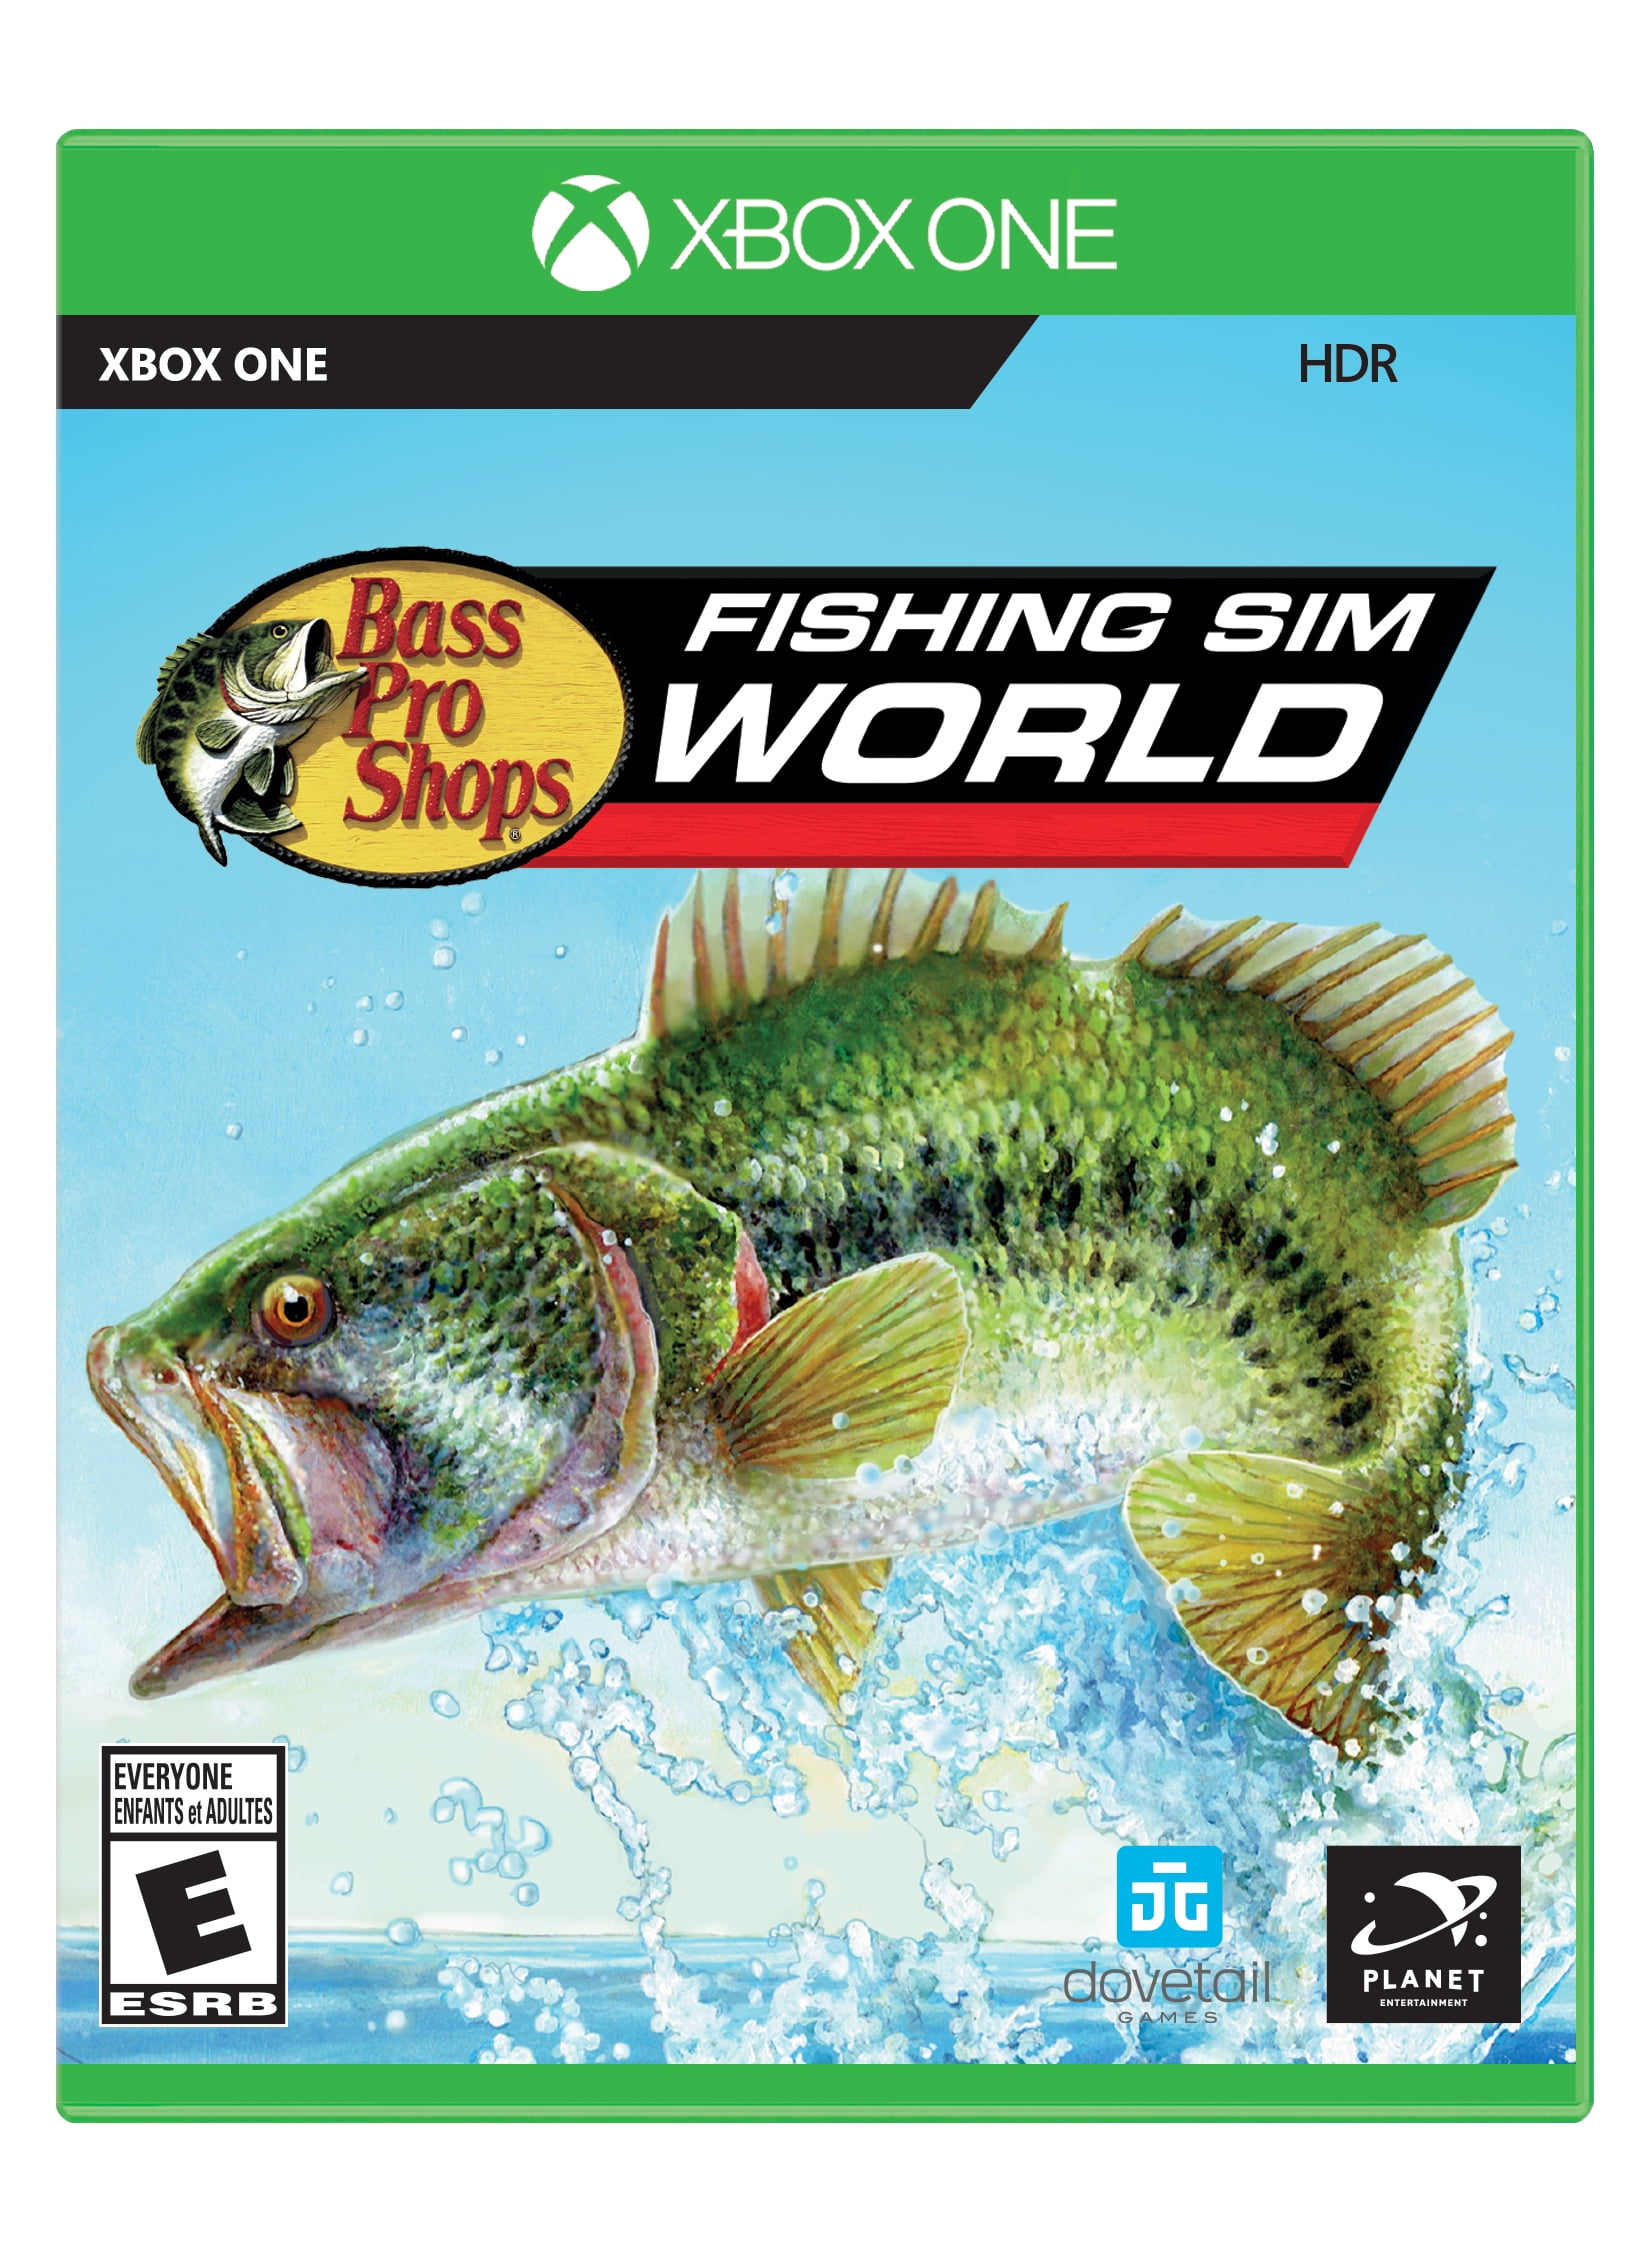 Bass Pro Shops Fishing Sim World, Planet Entertainment Llc, Xbox